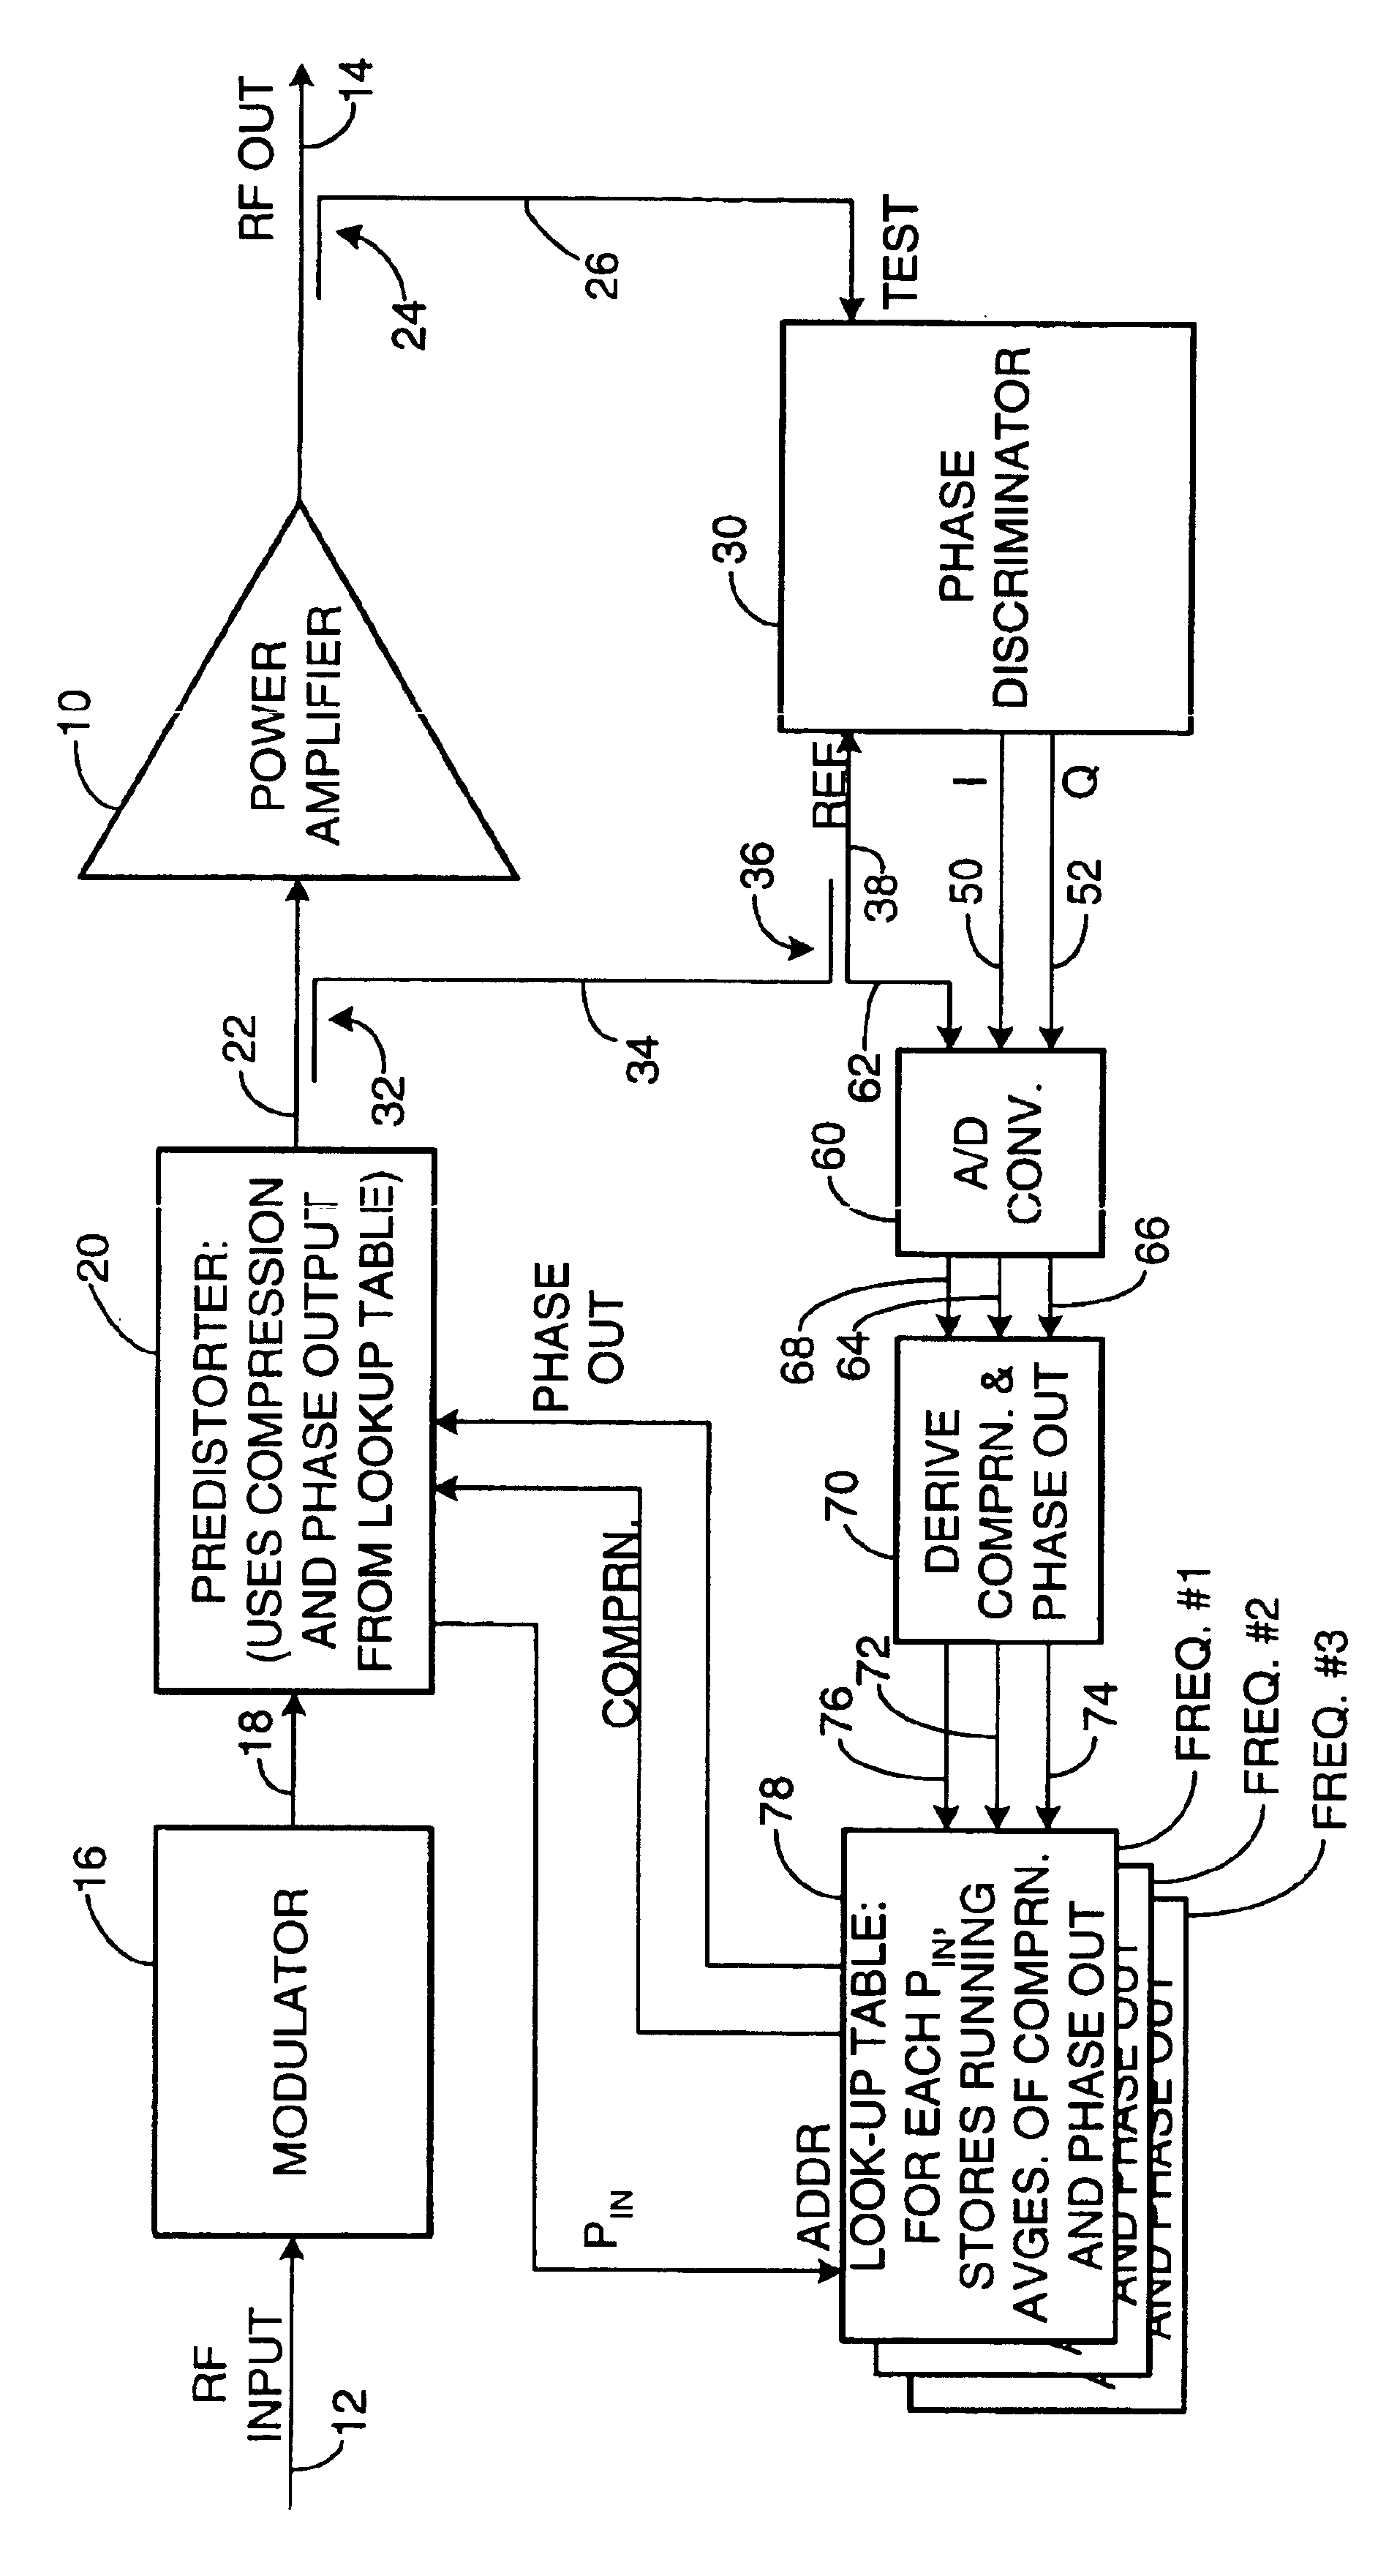 Digital predistortion for power amplifier